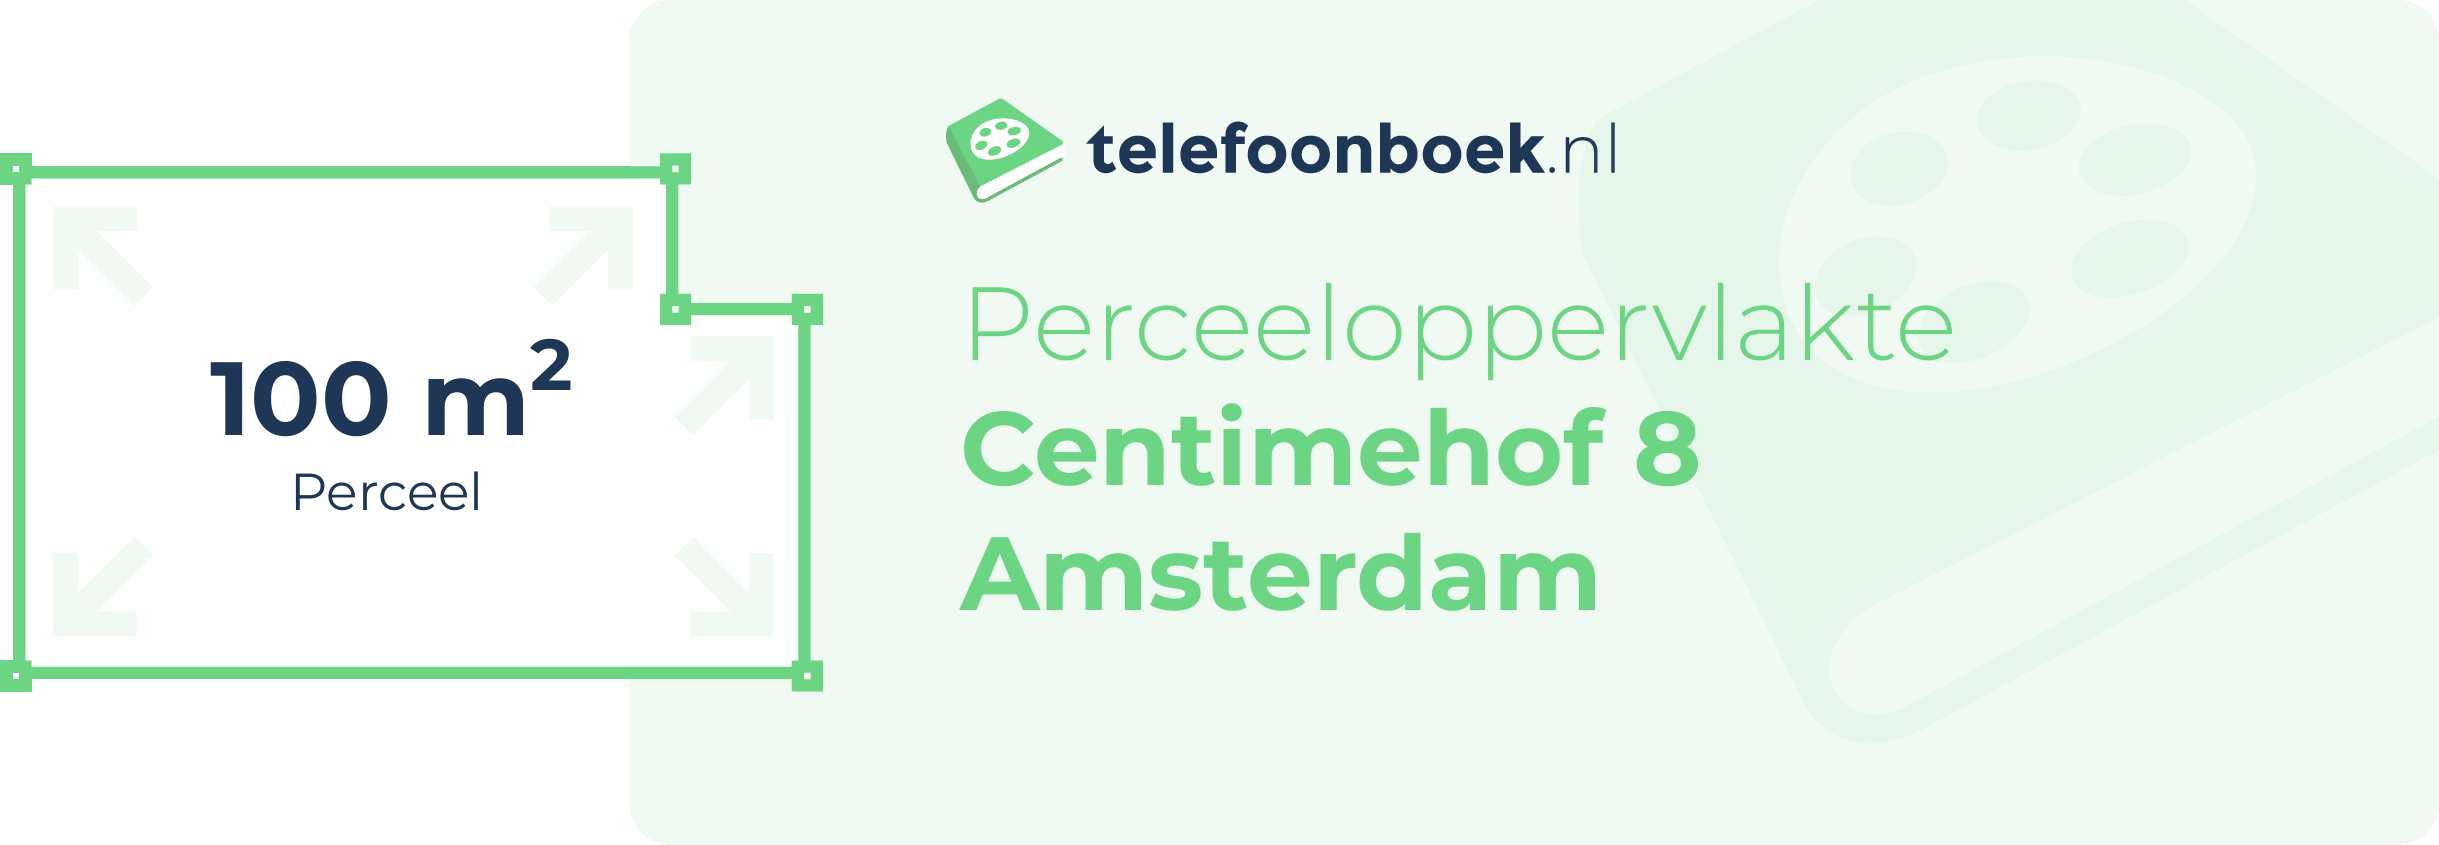 Perceeloppervlakte Centimehof 8 Amsterdam